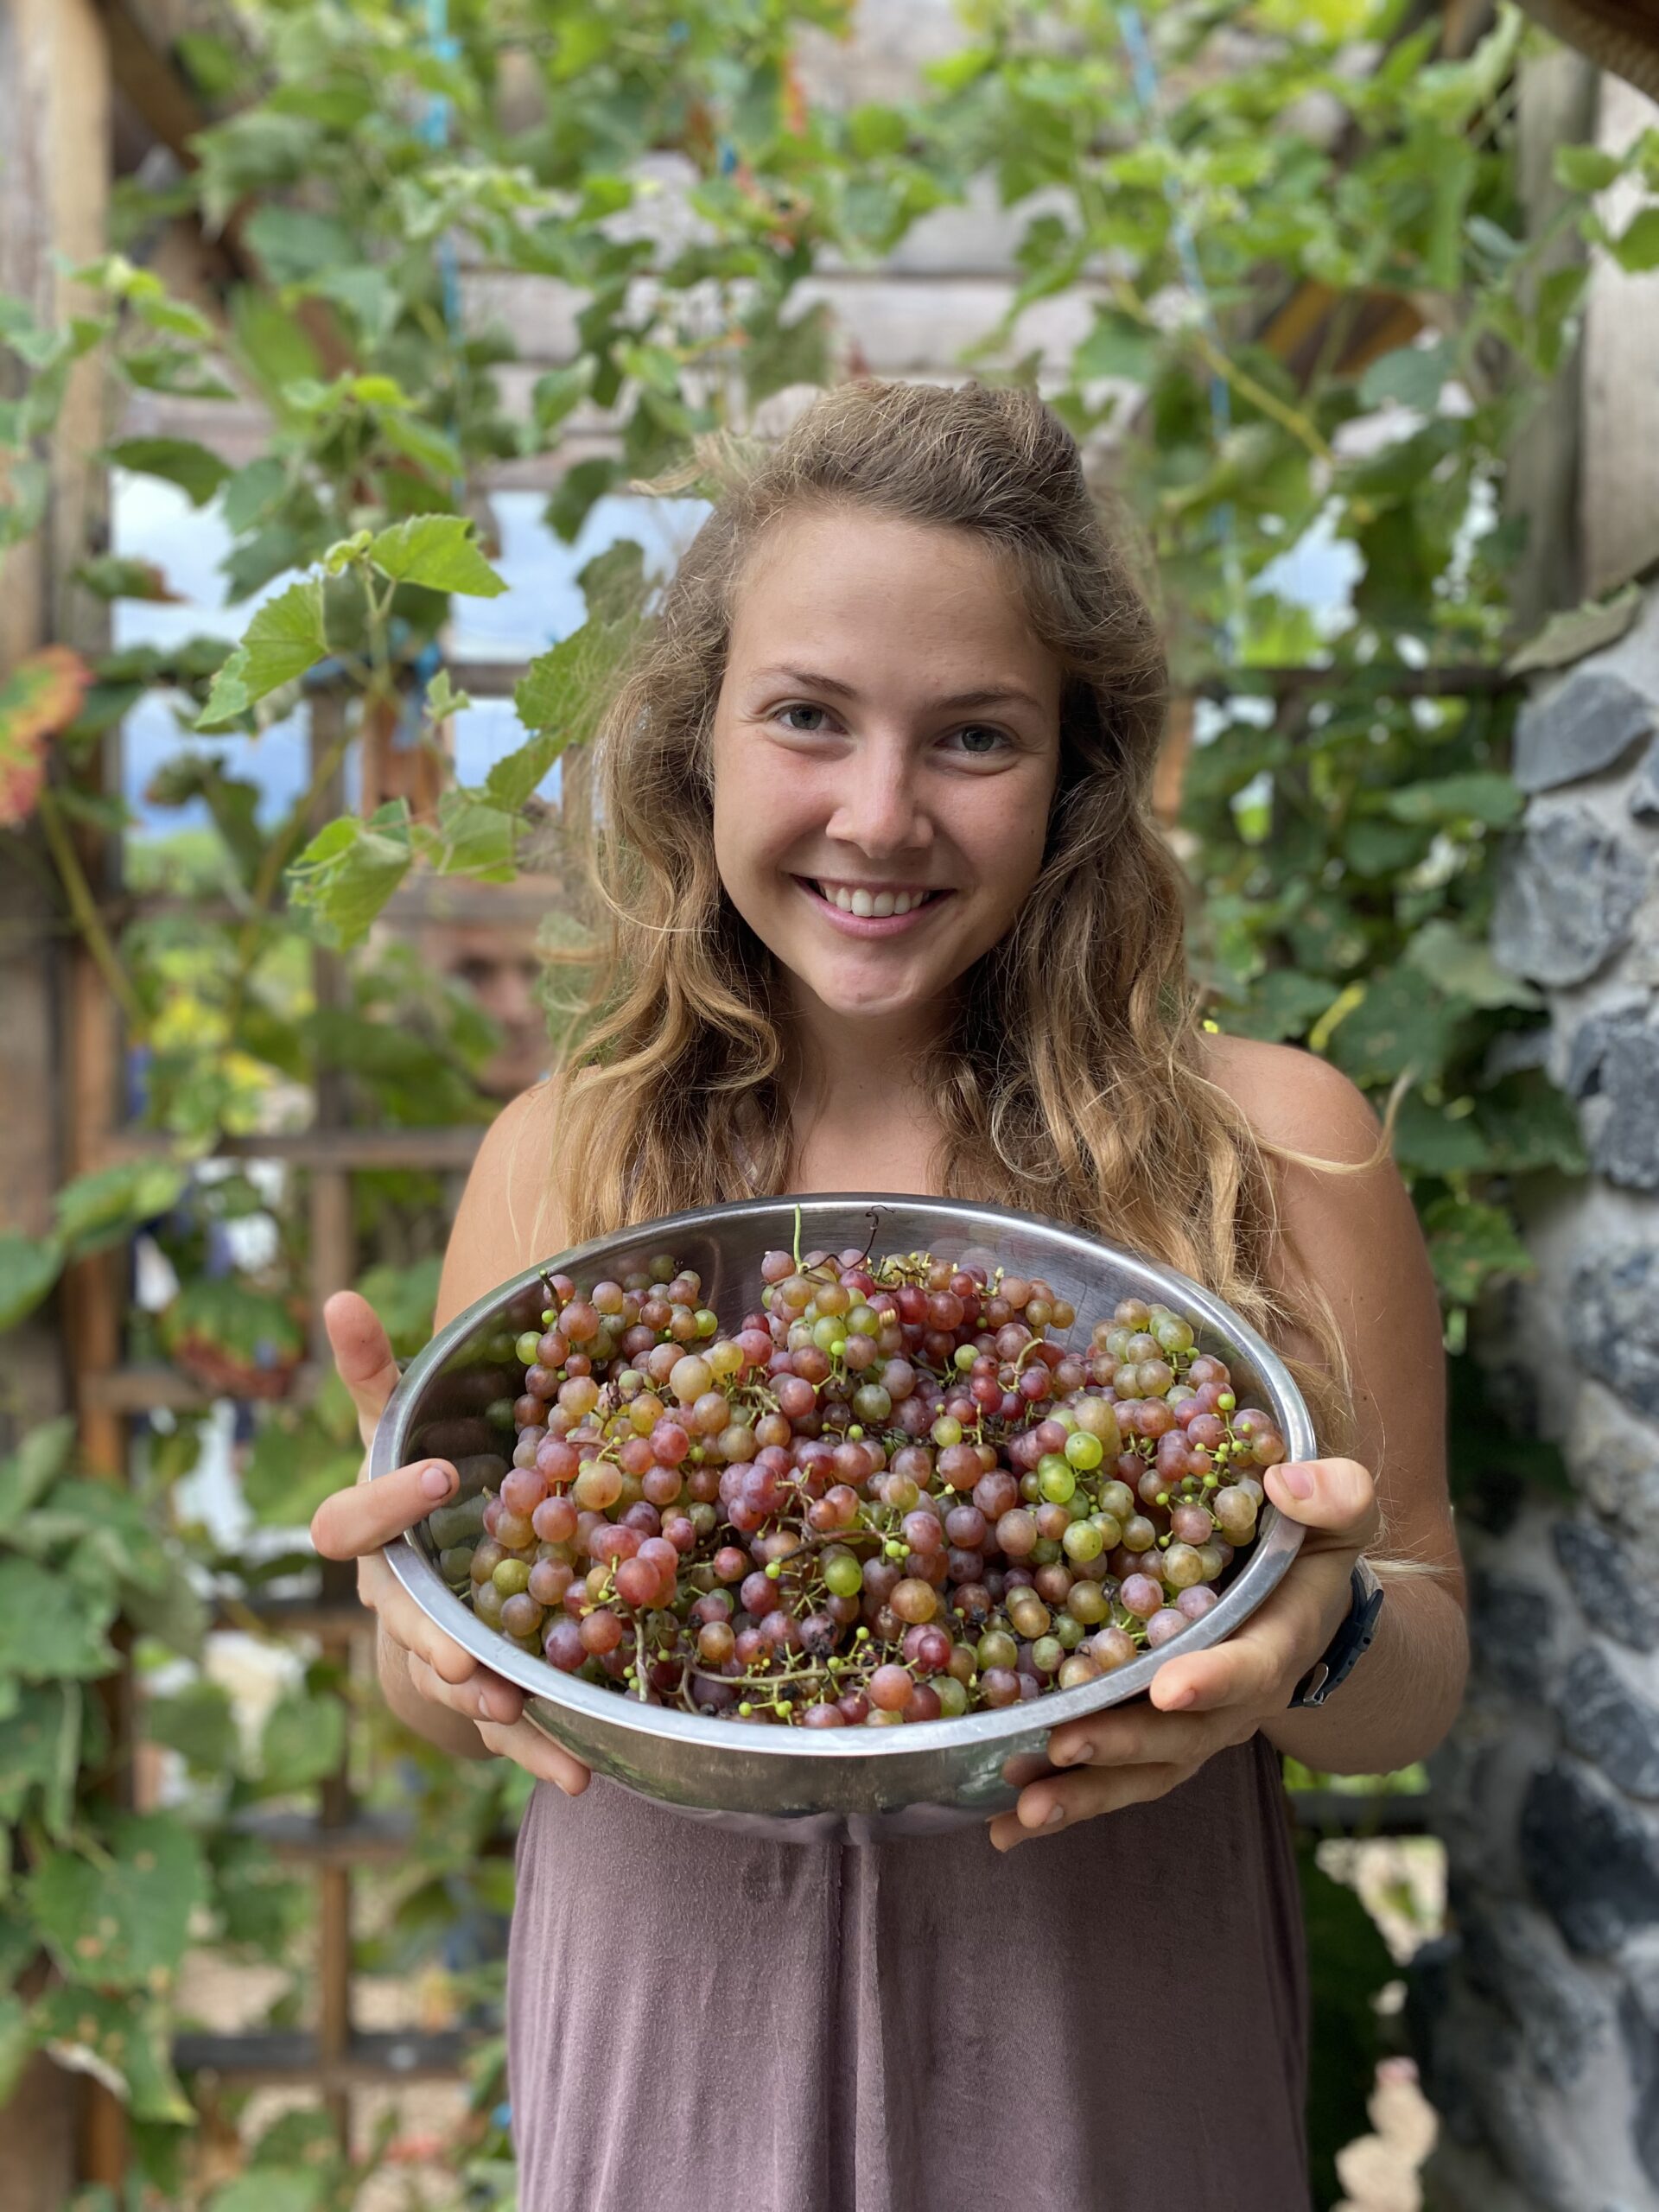 Intern harvesting grapes